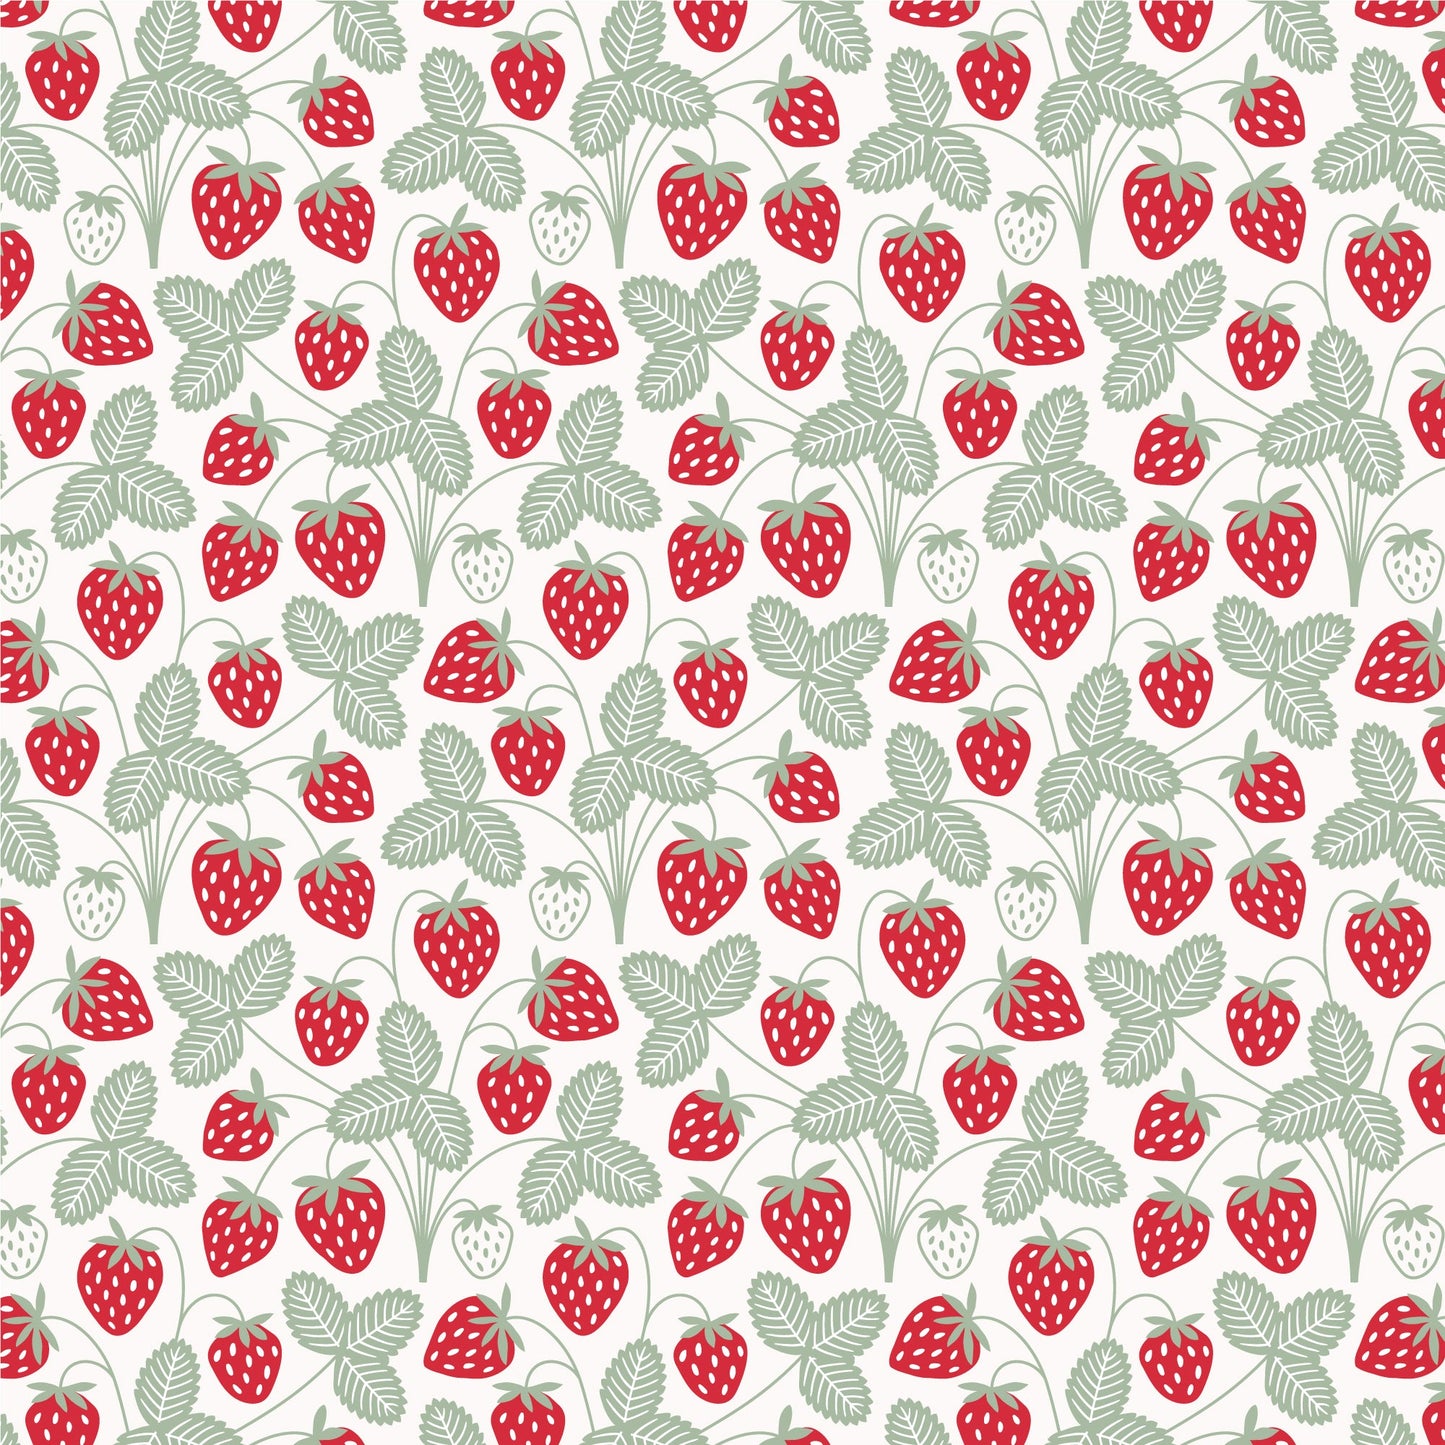 Bubble Romper - Strawberries Red & Green